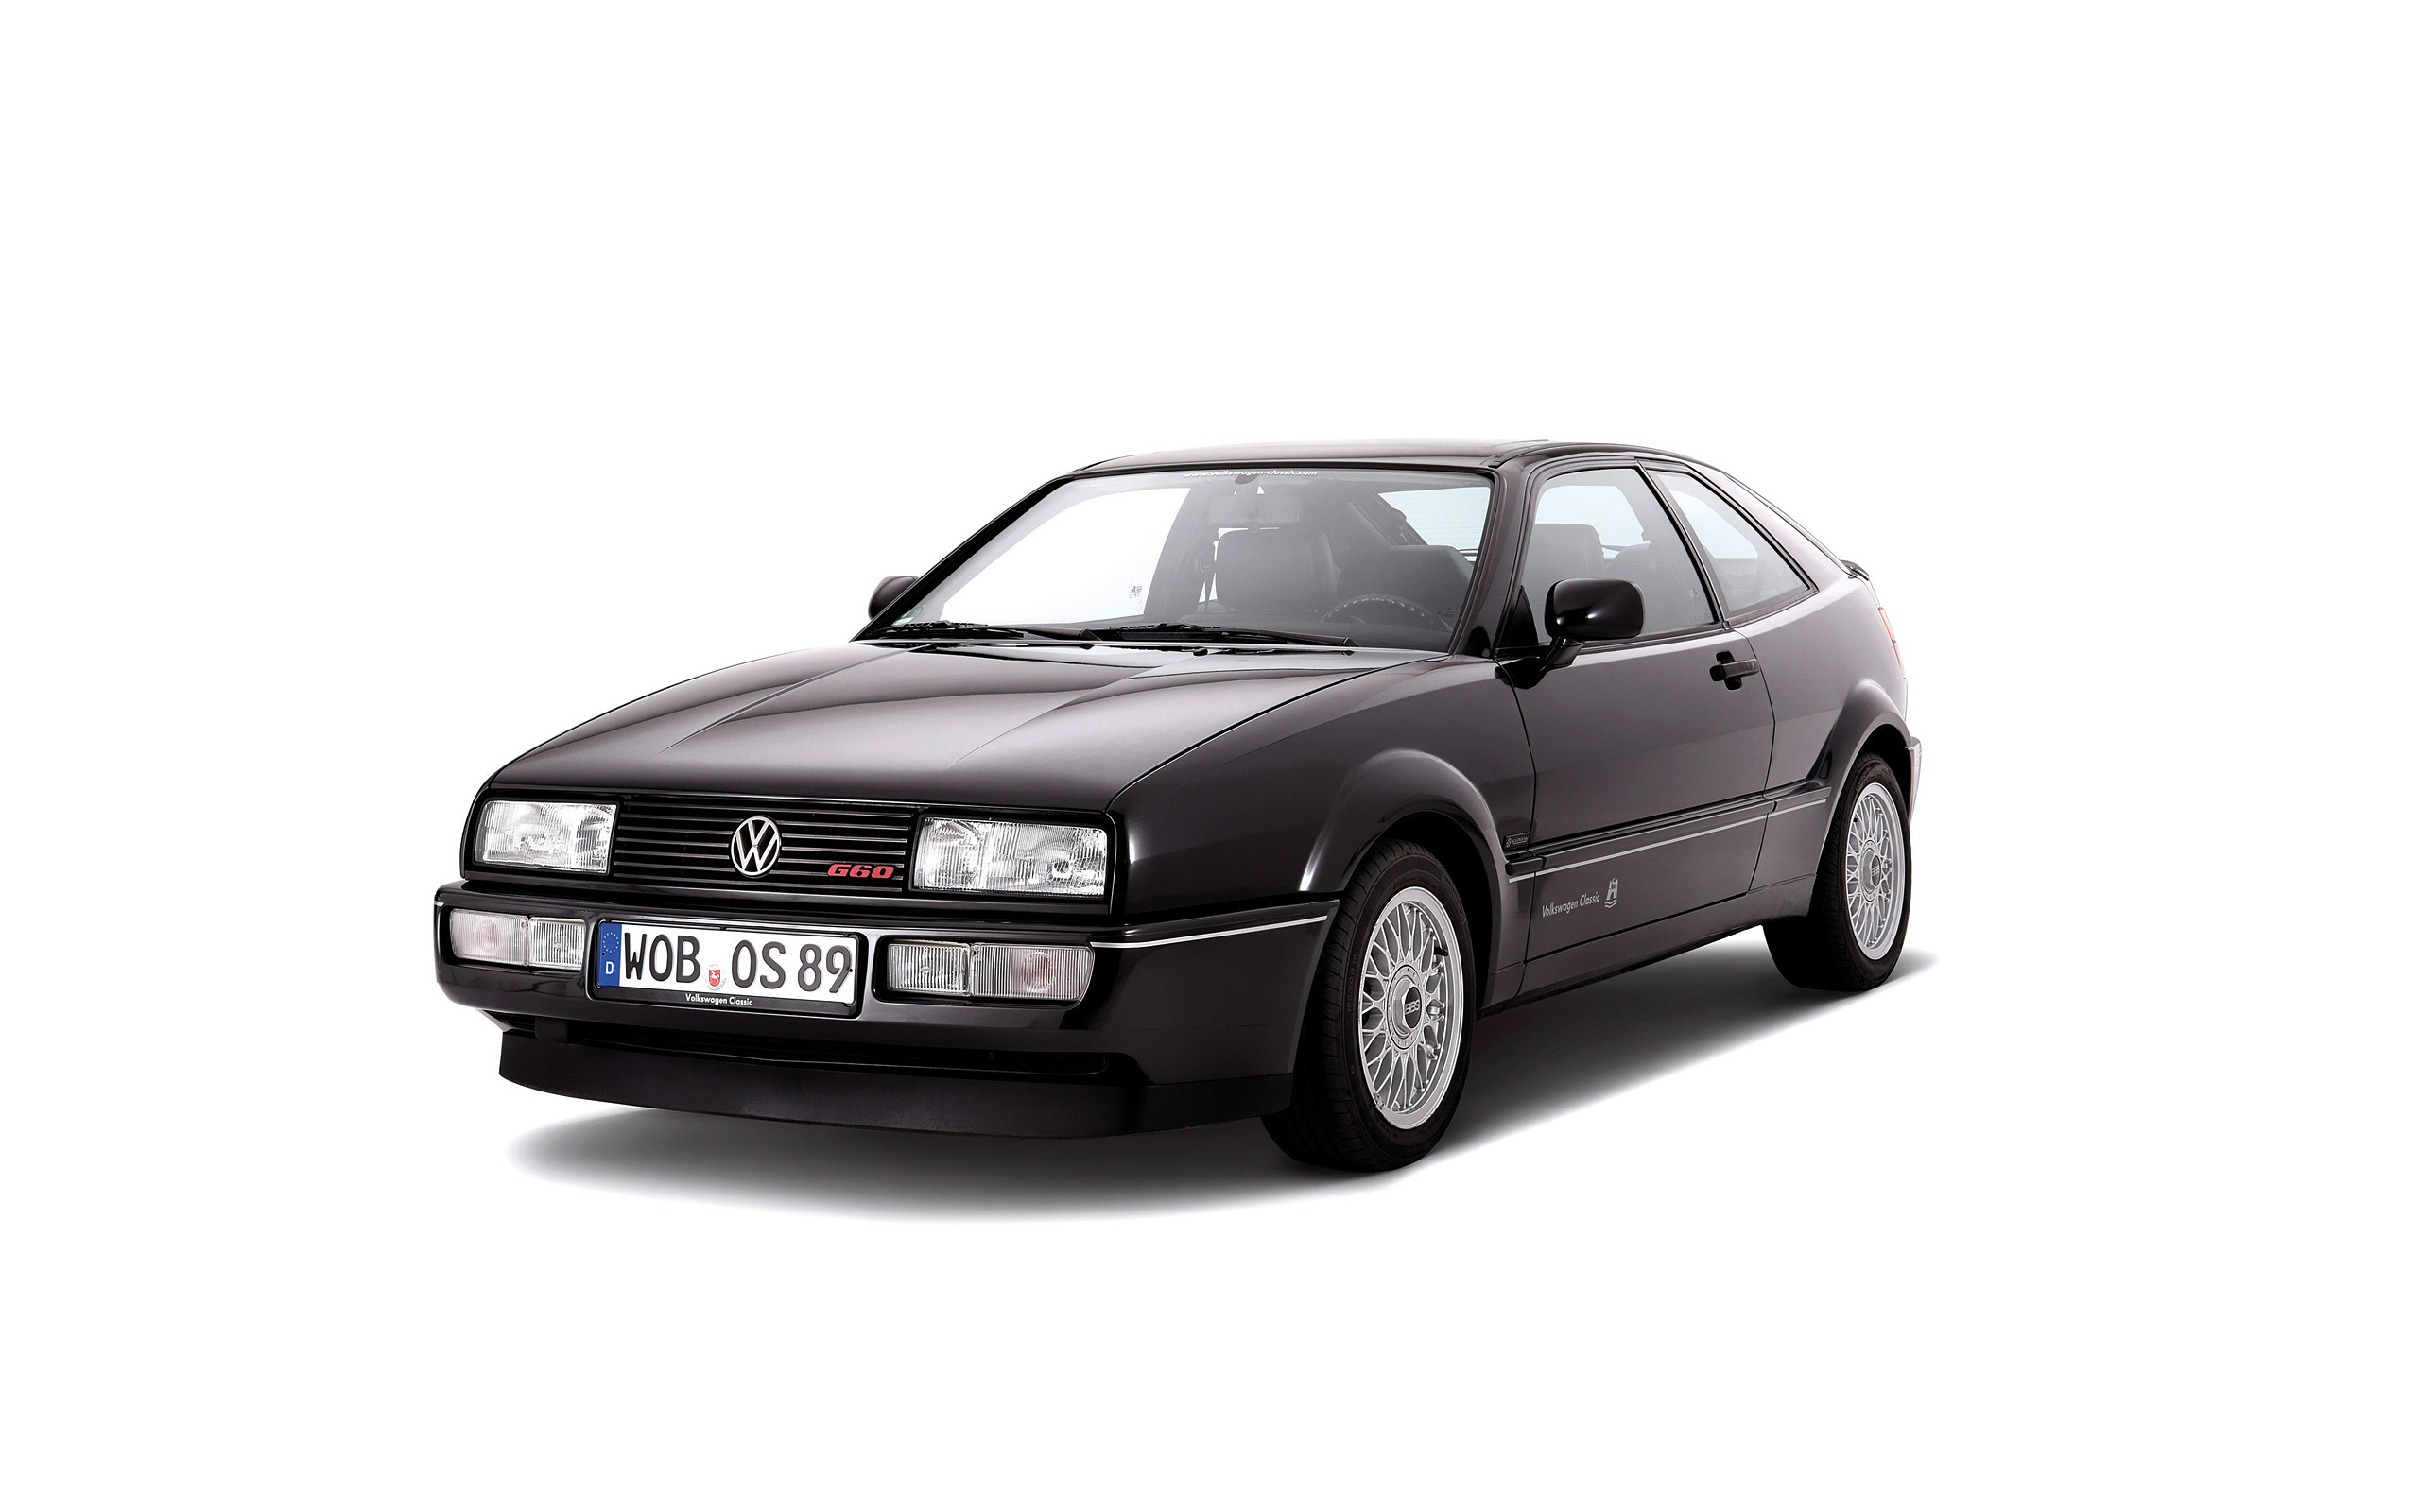  1988 Volkswagen Corrado G60 Wallpaper.